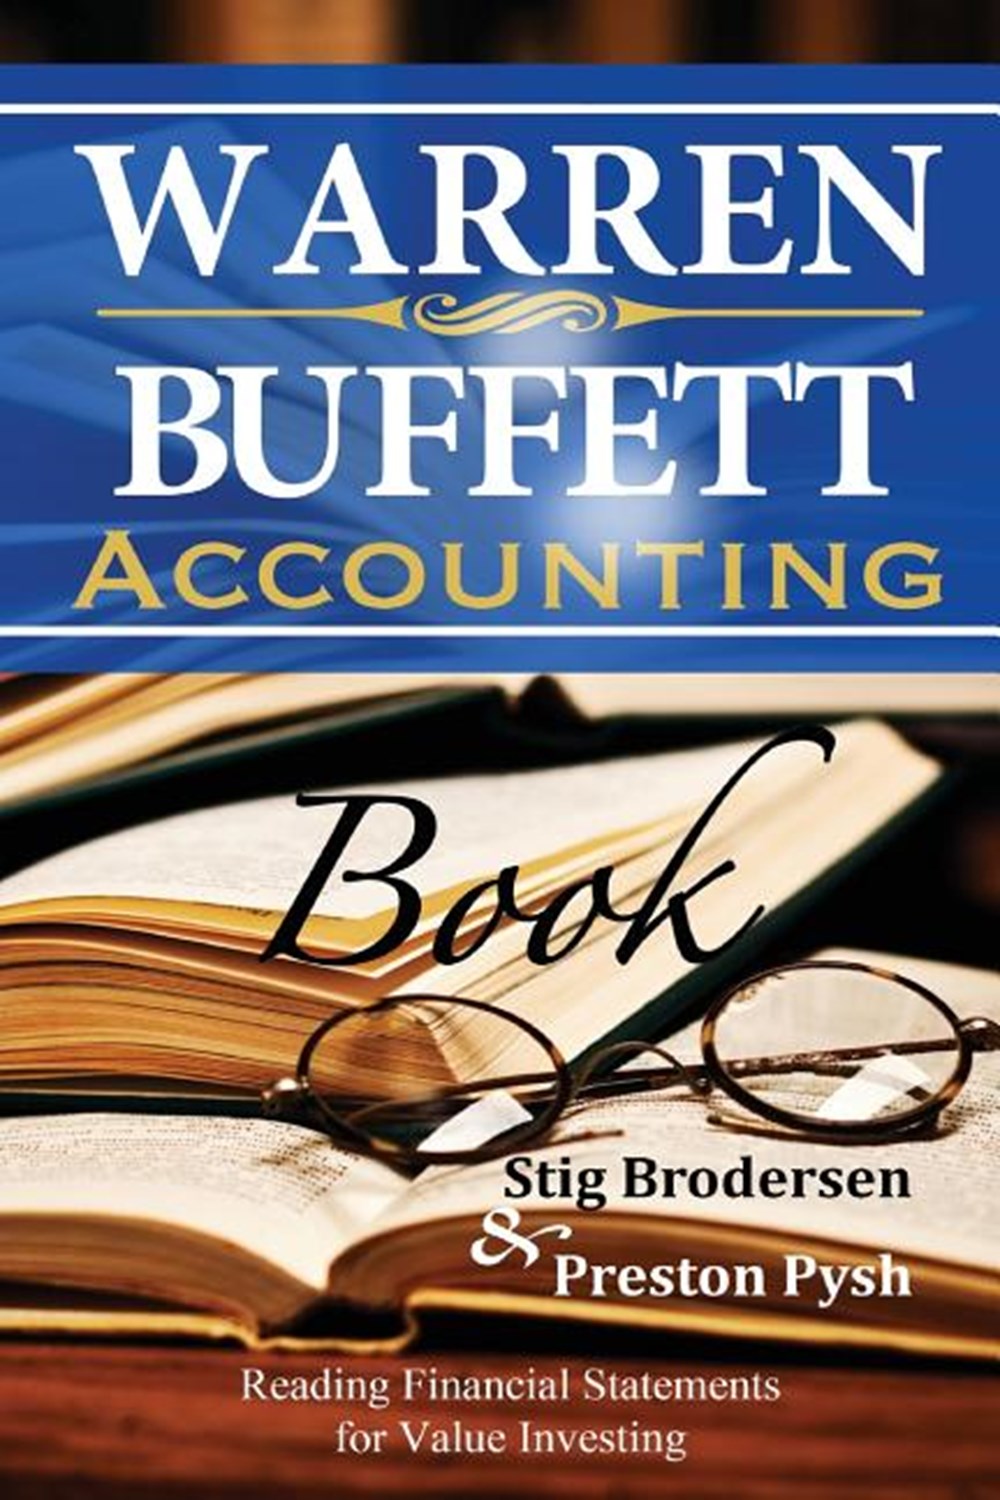 Buy Warren Buffett Accounting Book: Reading Financial Statements for